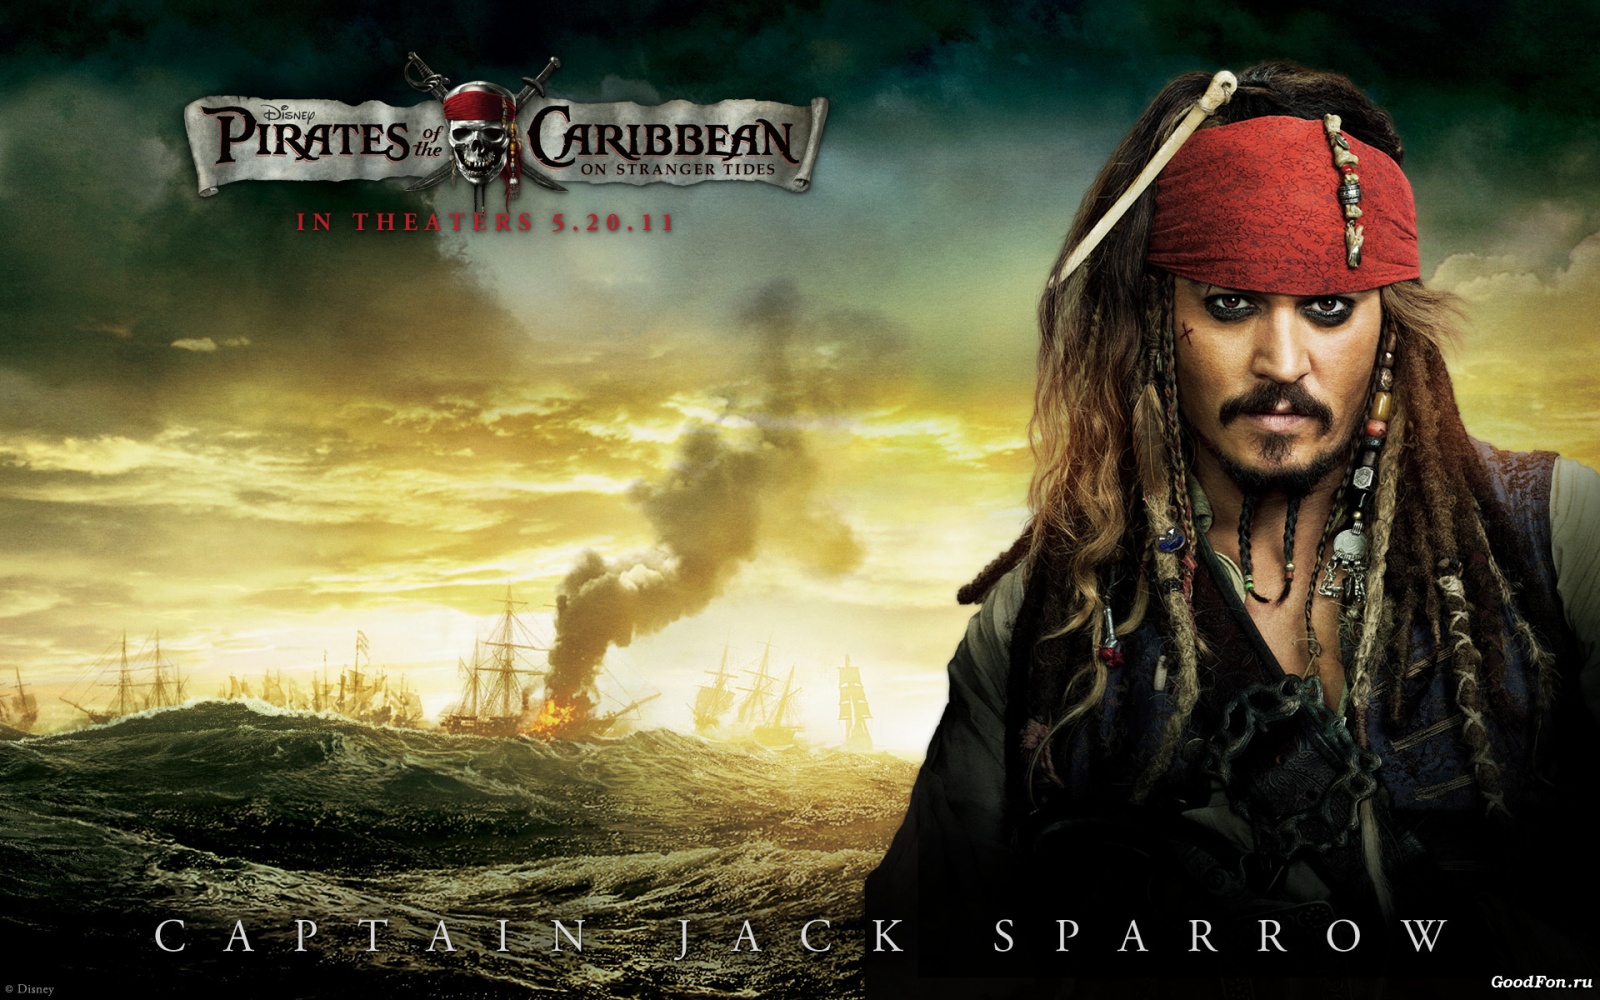 Captain Jack Sparrow Wallpaper For